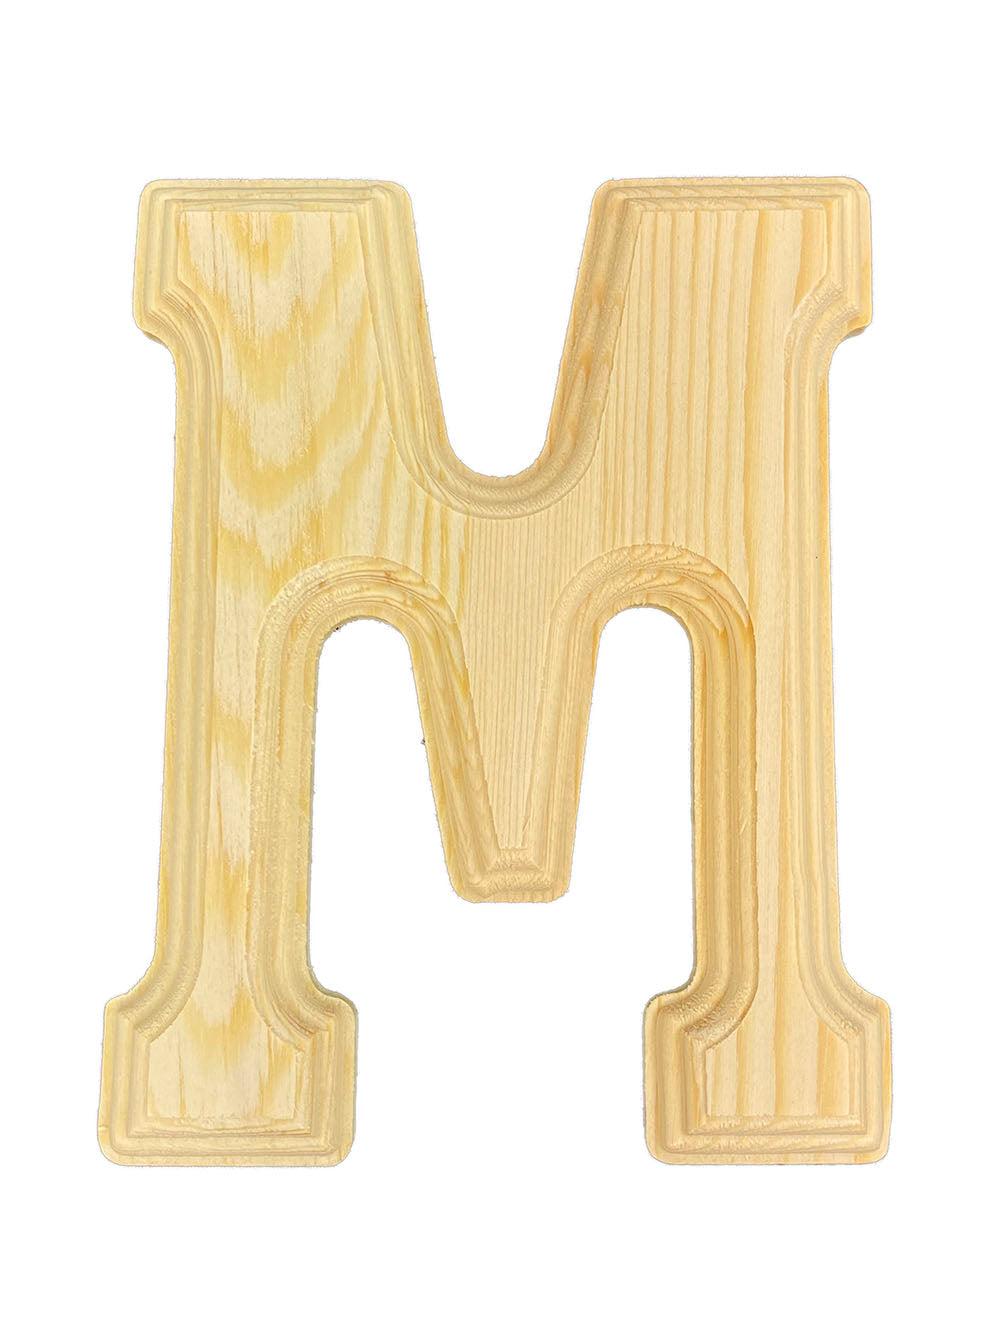 Pressed Board Beveled Wooden Letter B, Natural, 6-inch 